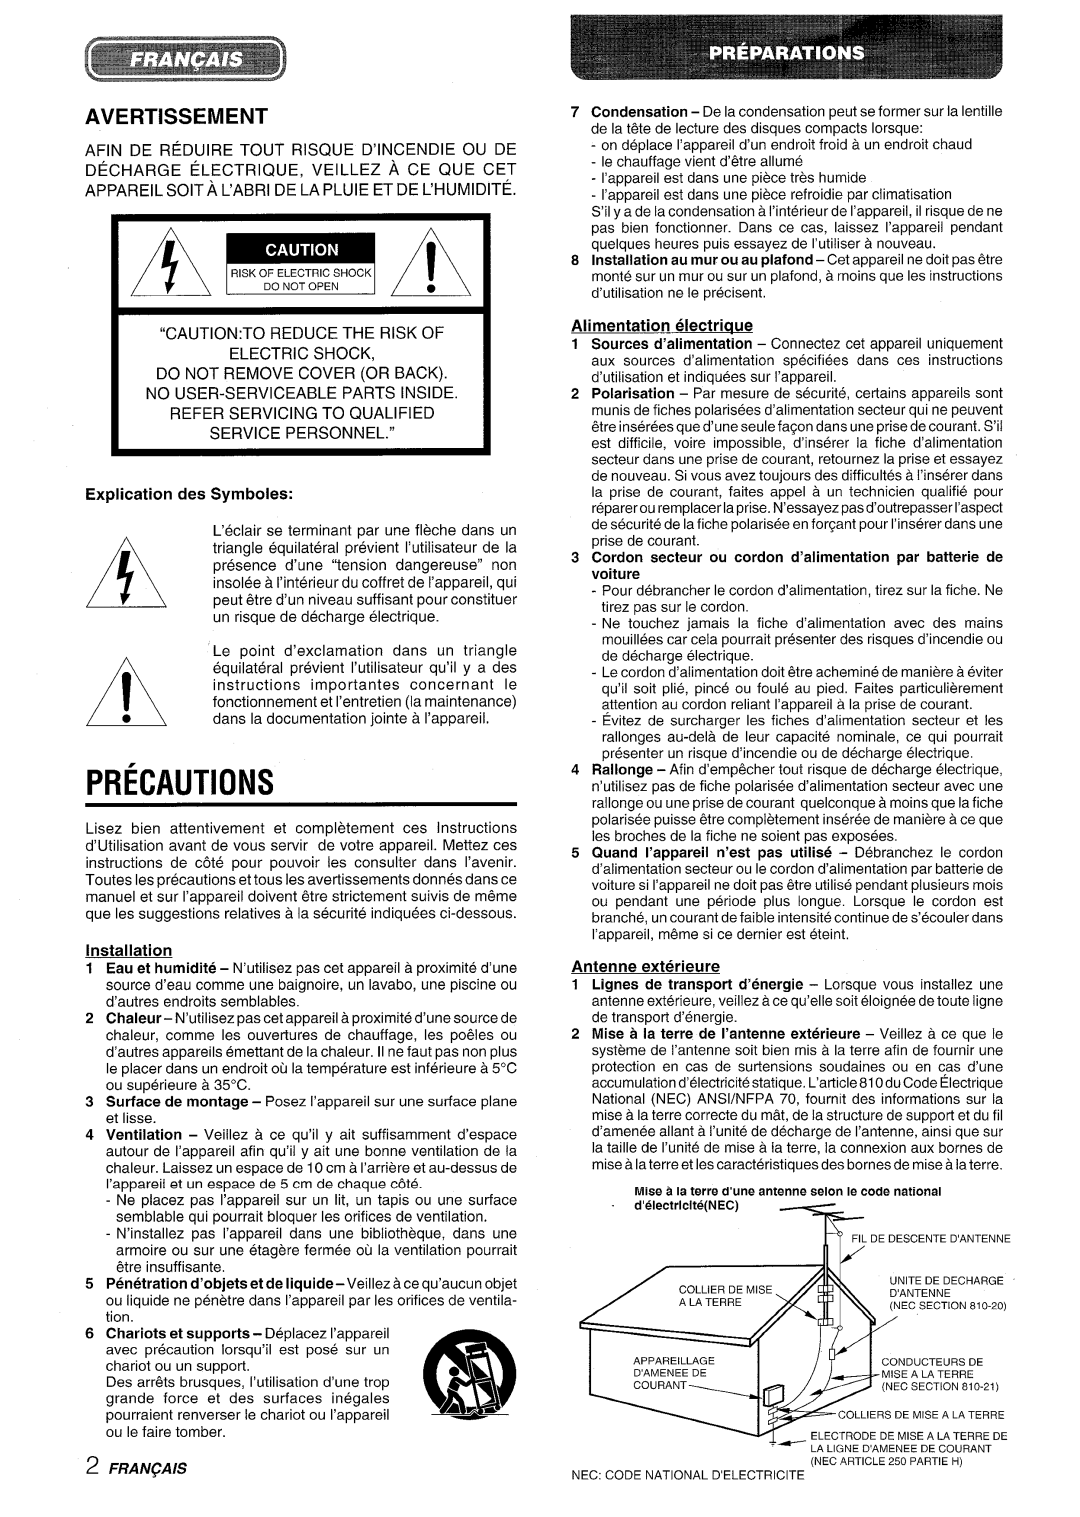 Aiwa XR-MD95 manual AE!!R3A, Avertissement, Appareilsoita L’Abri De La Pluie Etde L’Humidite, “Cautionto Reduce The Risk Of 